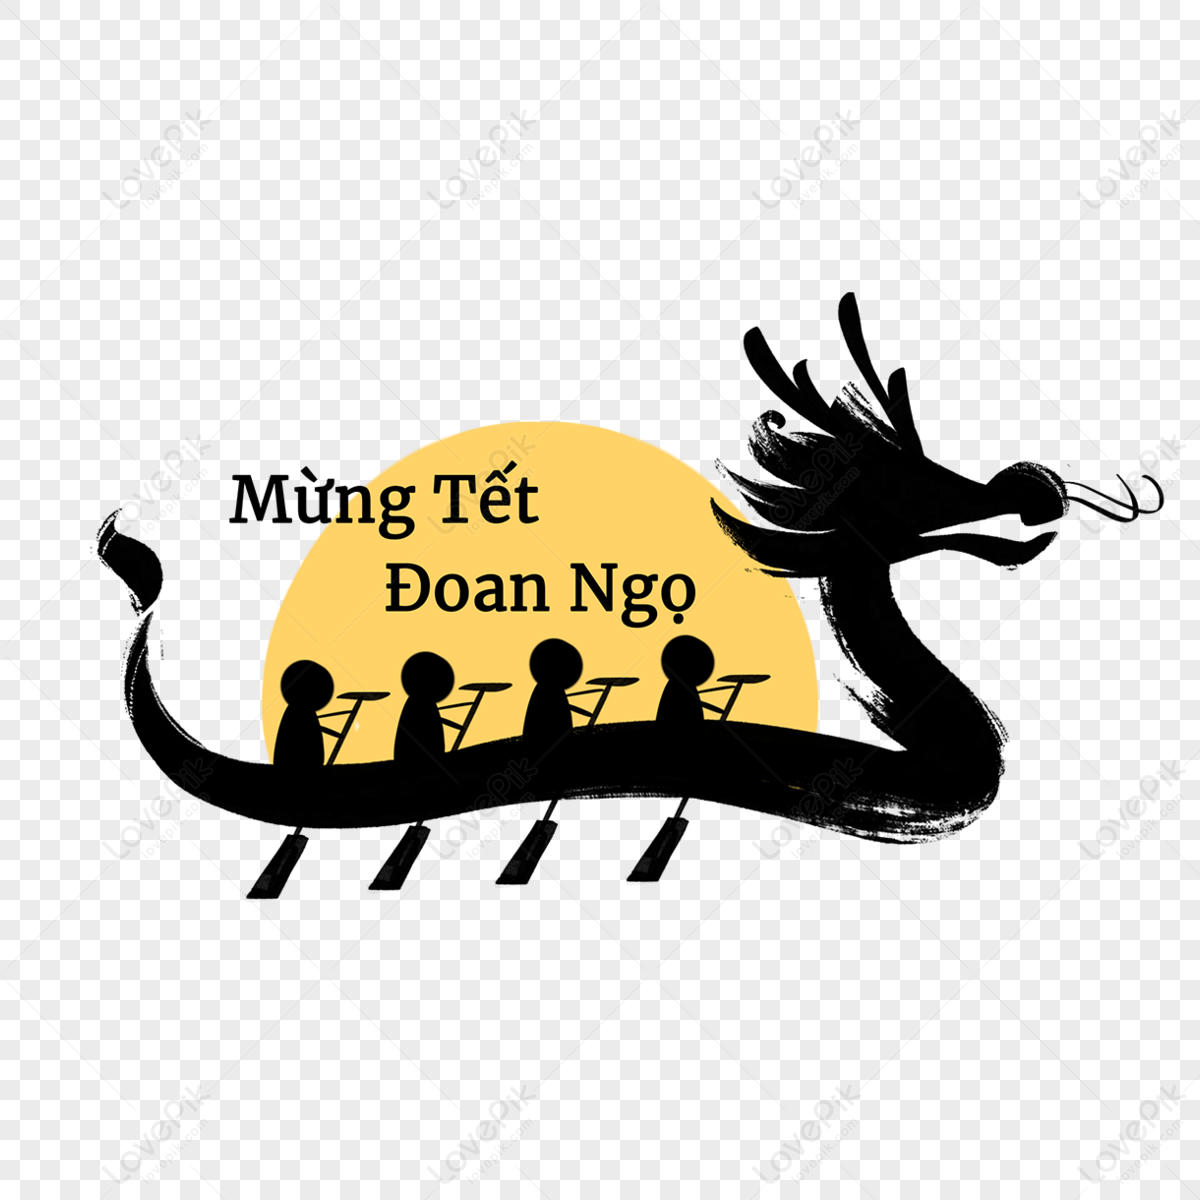 Vietnam Dragon Boat Festival Dragon Boat Silhouette,tradition,creativity png free download